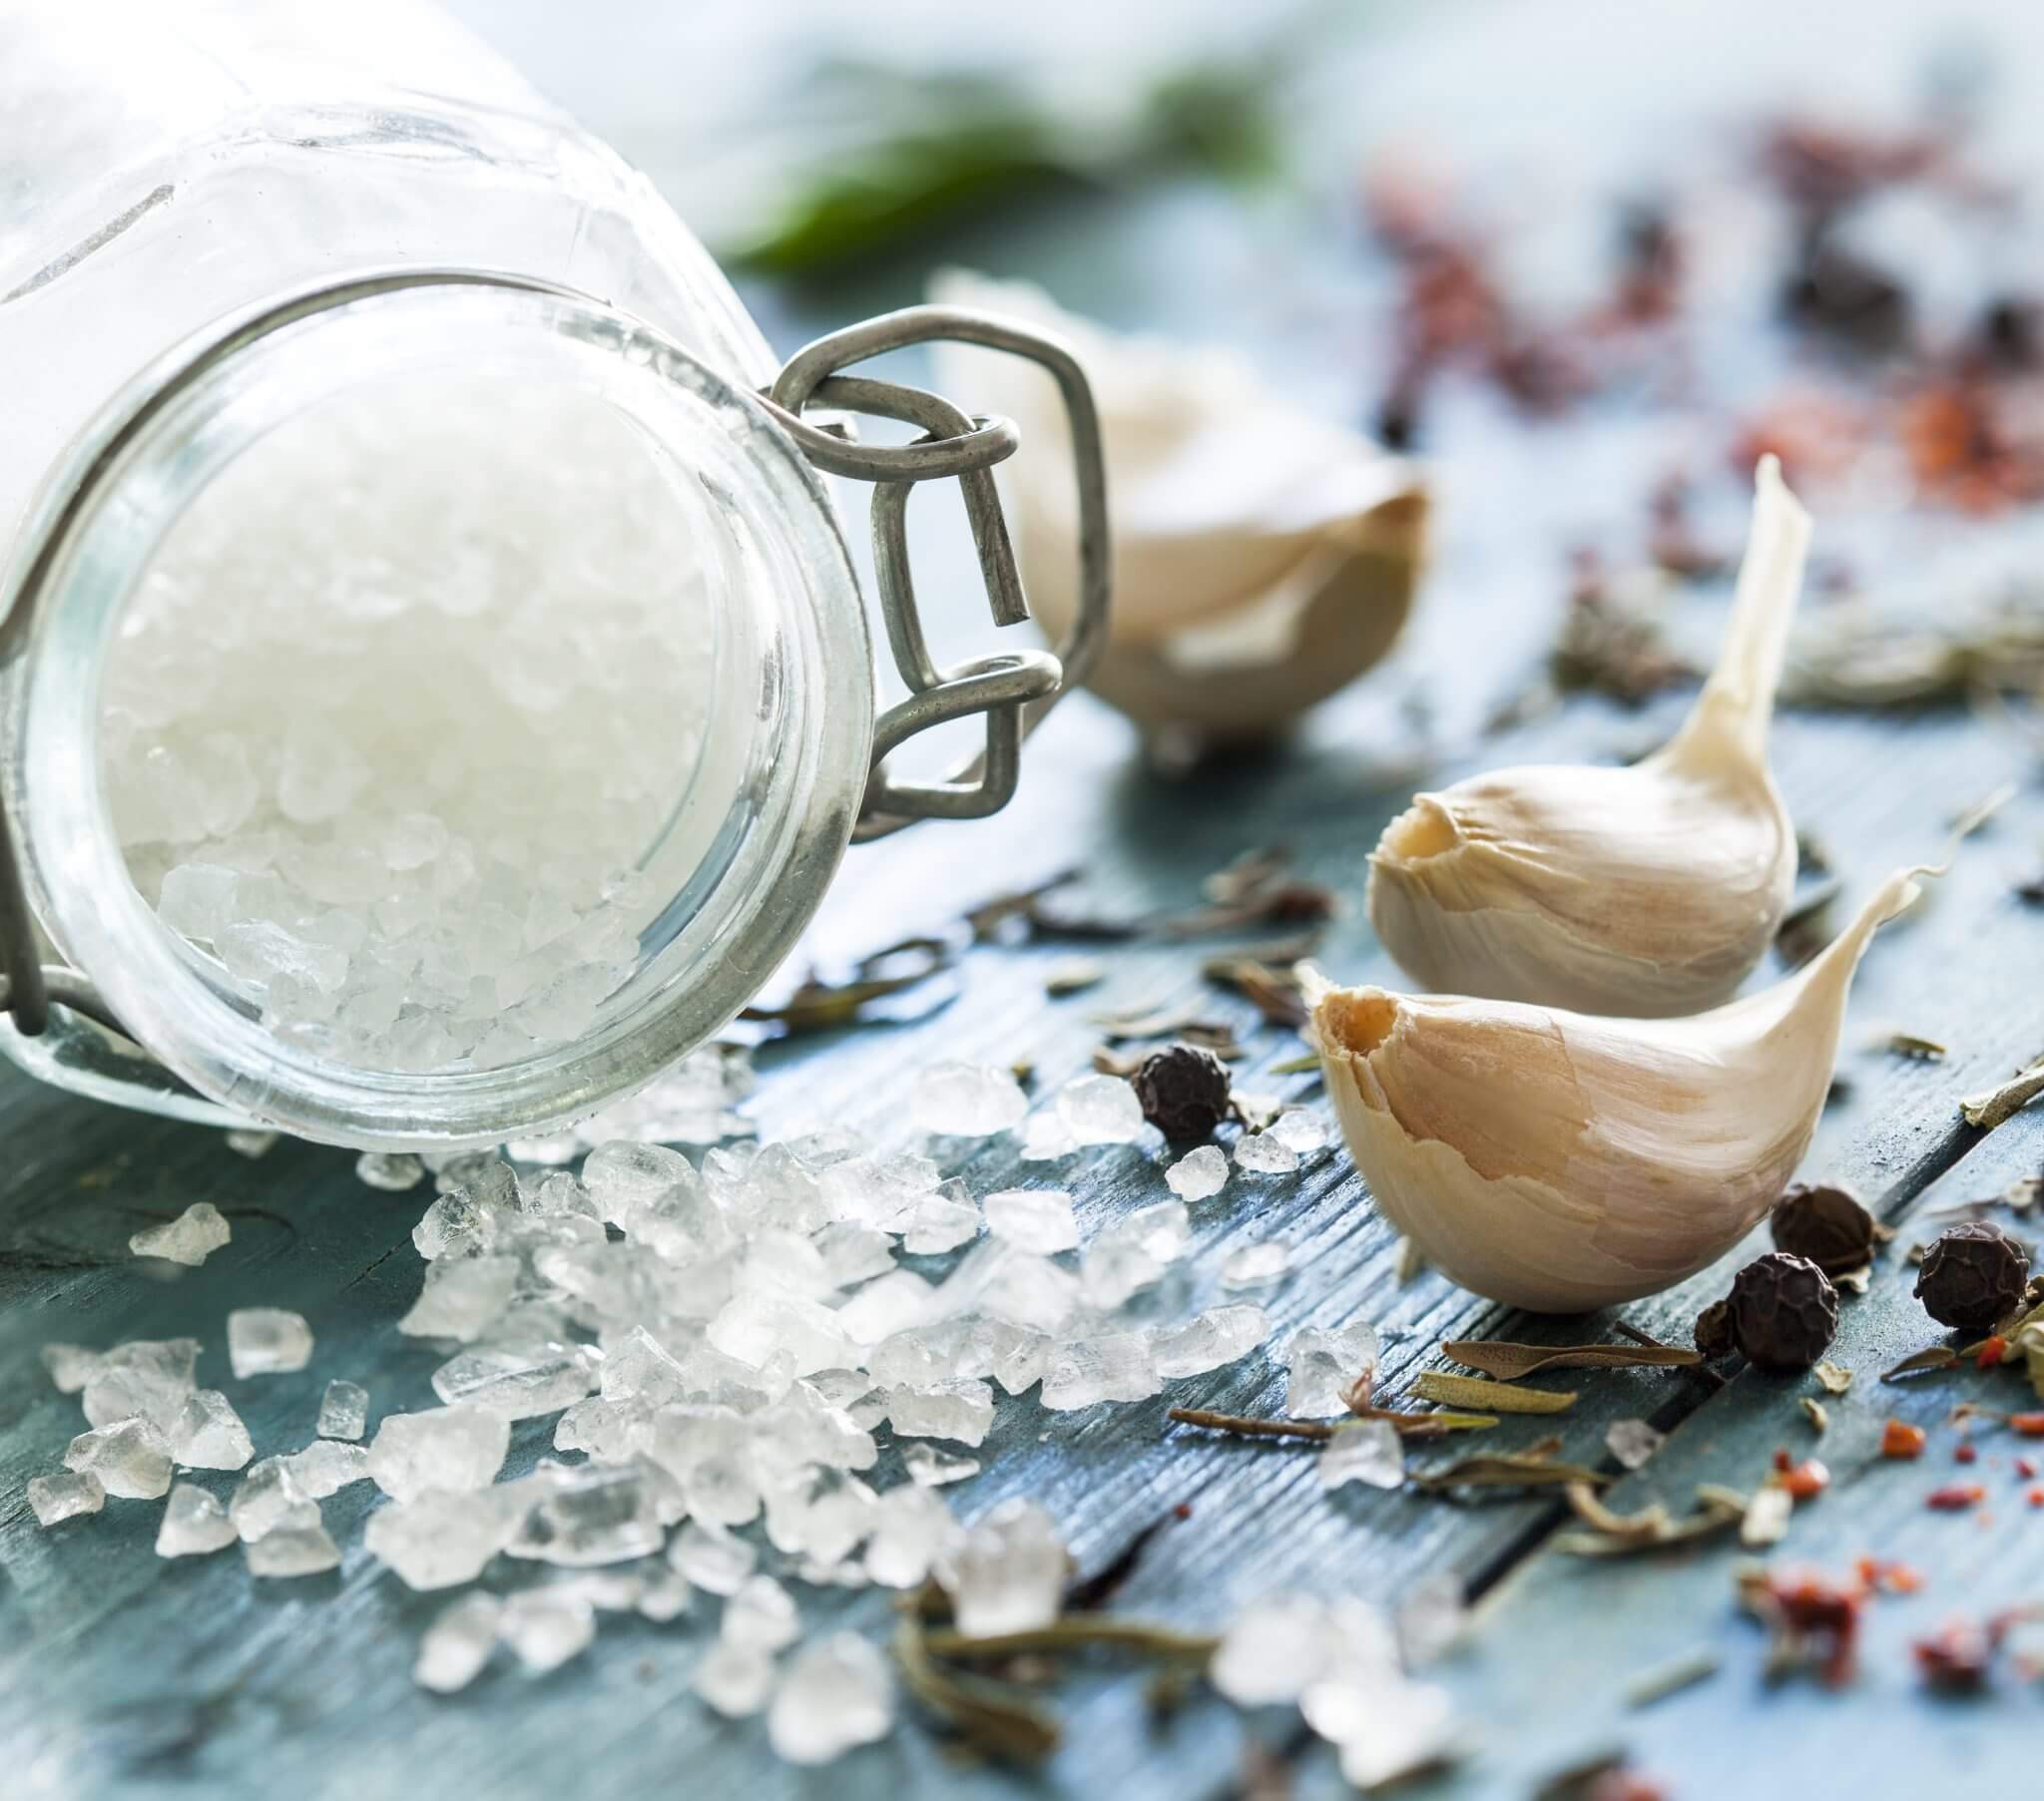 Homegrown Diy Herbal Salt Recipe